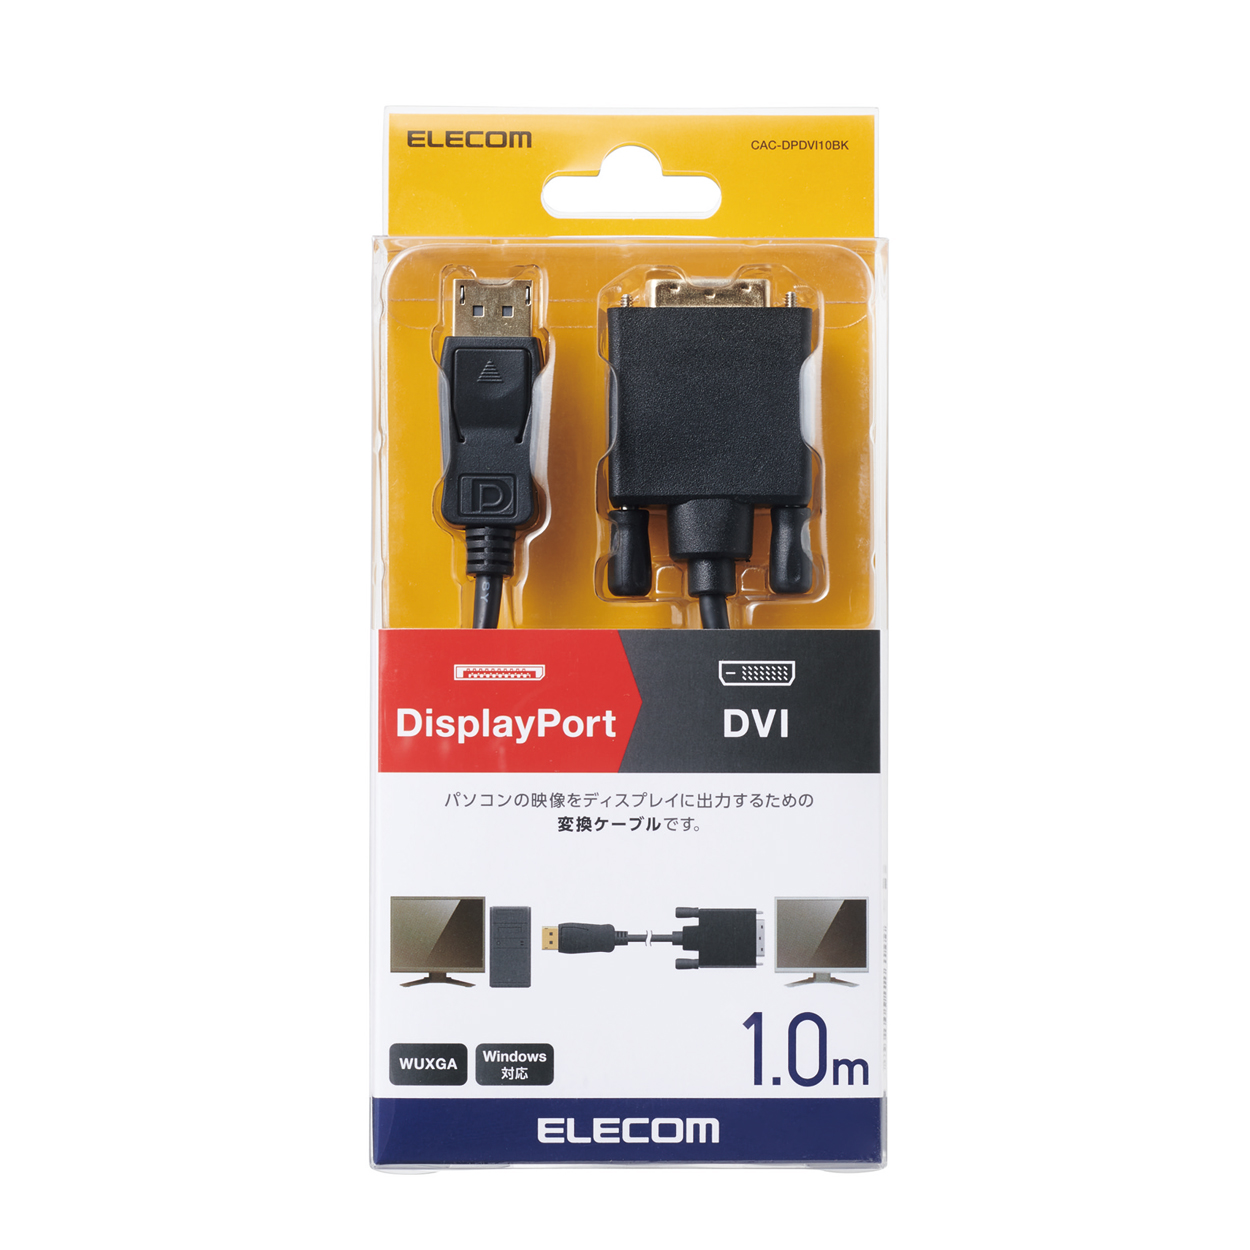 DisplayPort用DVI変換ケーブル | エレコムダイレクトショップ本店はPC周辺機器メーカー「ELECOM」の直営通販サイト